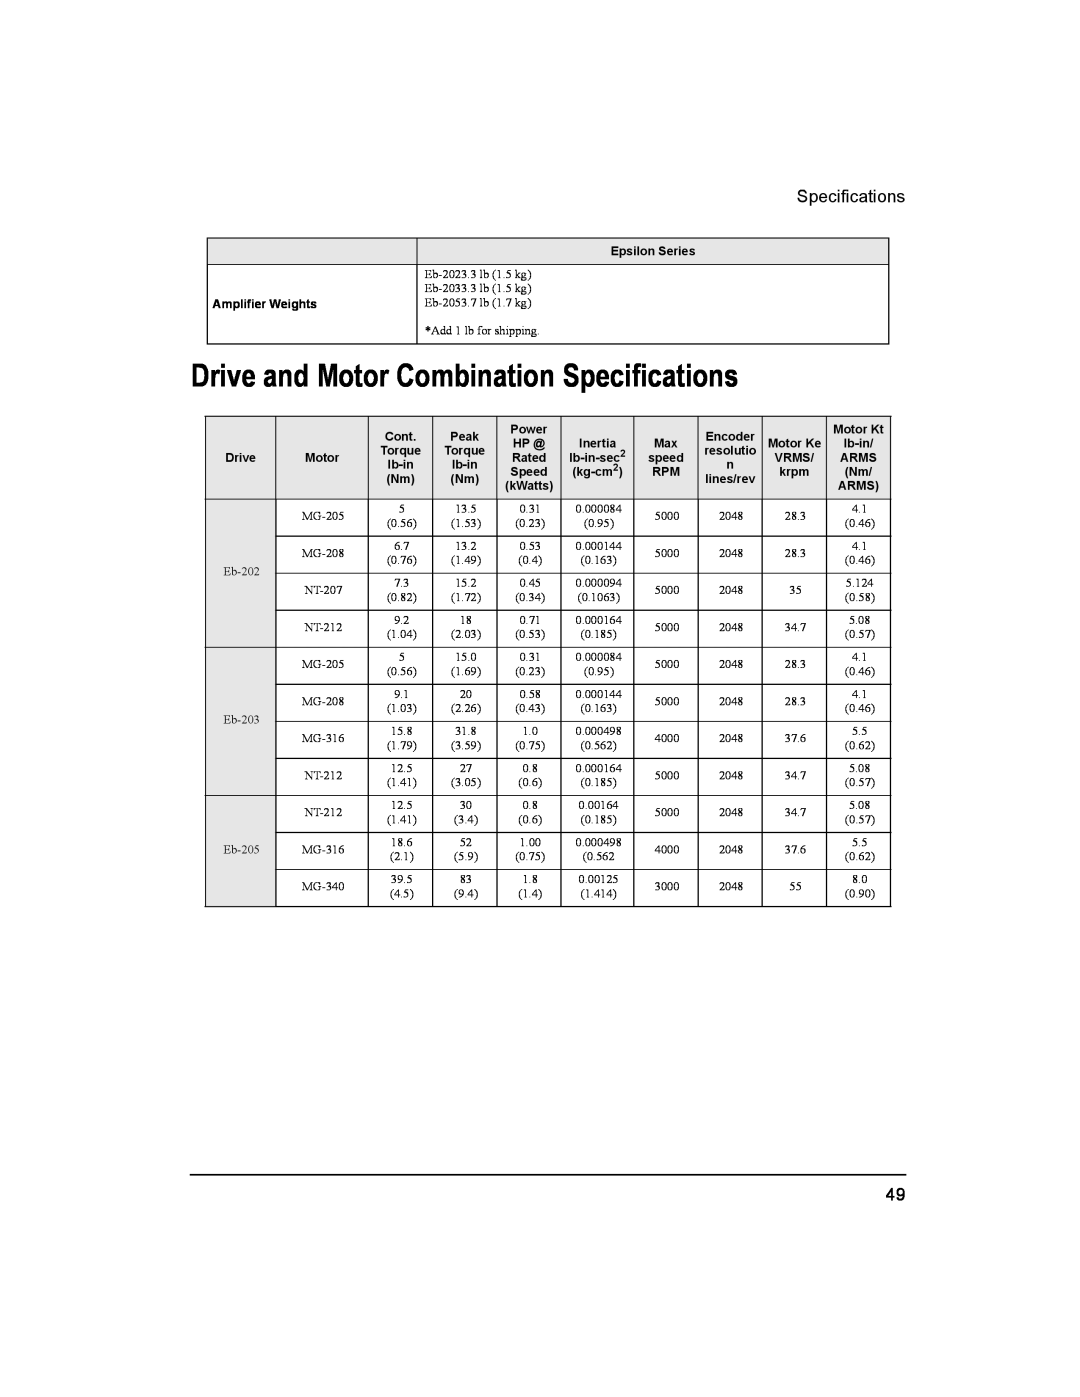 Emerson Epsilon Eb Digital Servo Drive Drive and Motor Combination Specifications, Epsilon Series, Amplifier Weights, Cont 